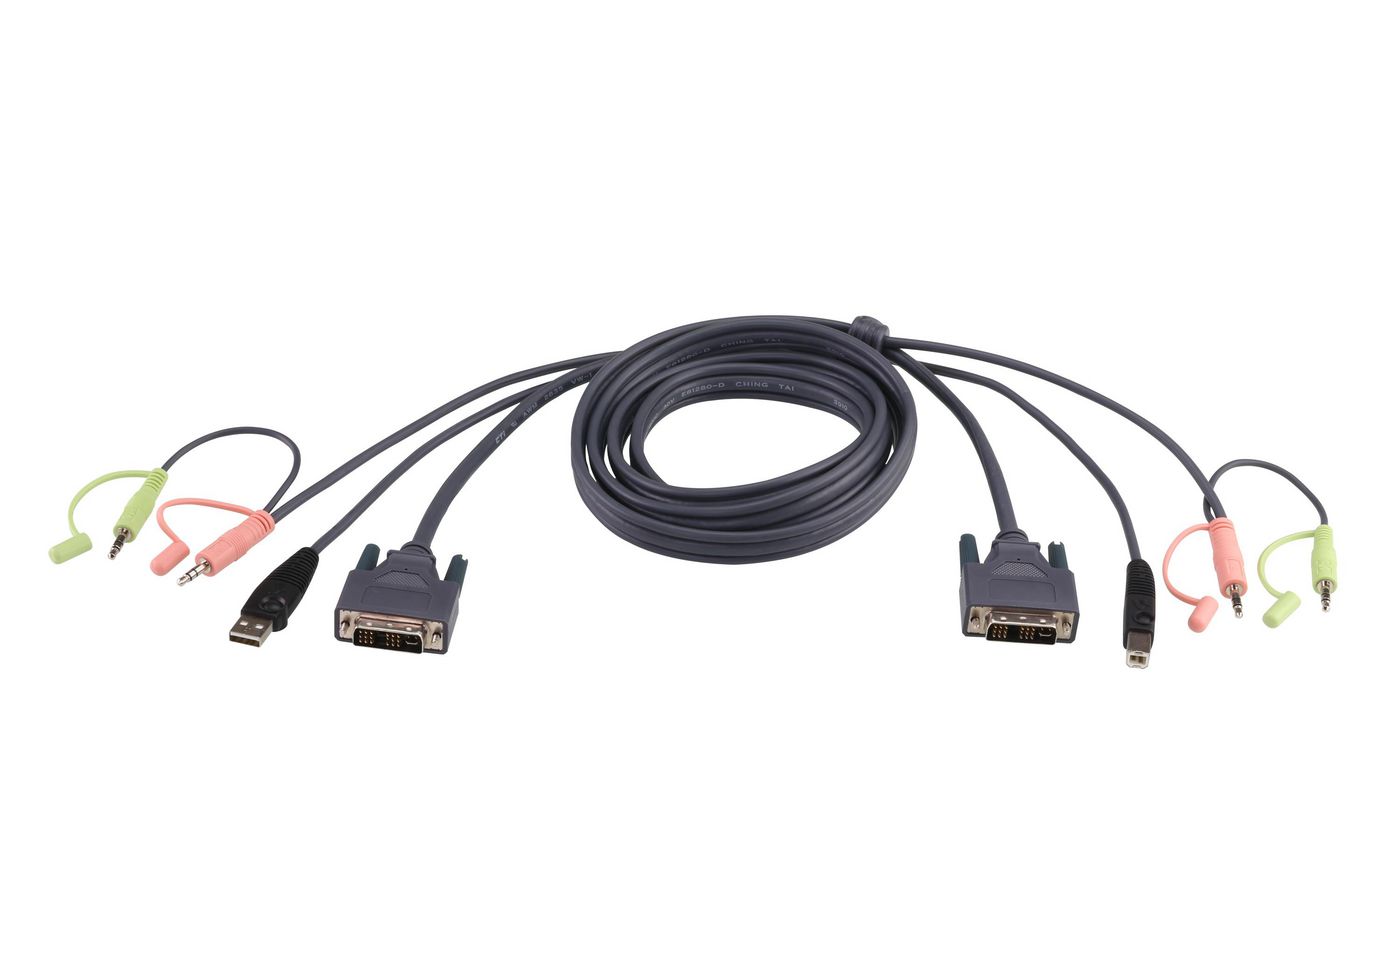 Aten 2L-7D02UD DVID Dual Link Cable 1.8m 